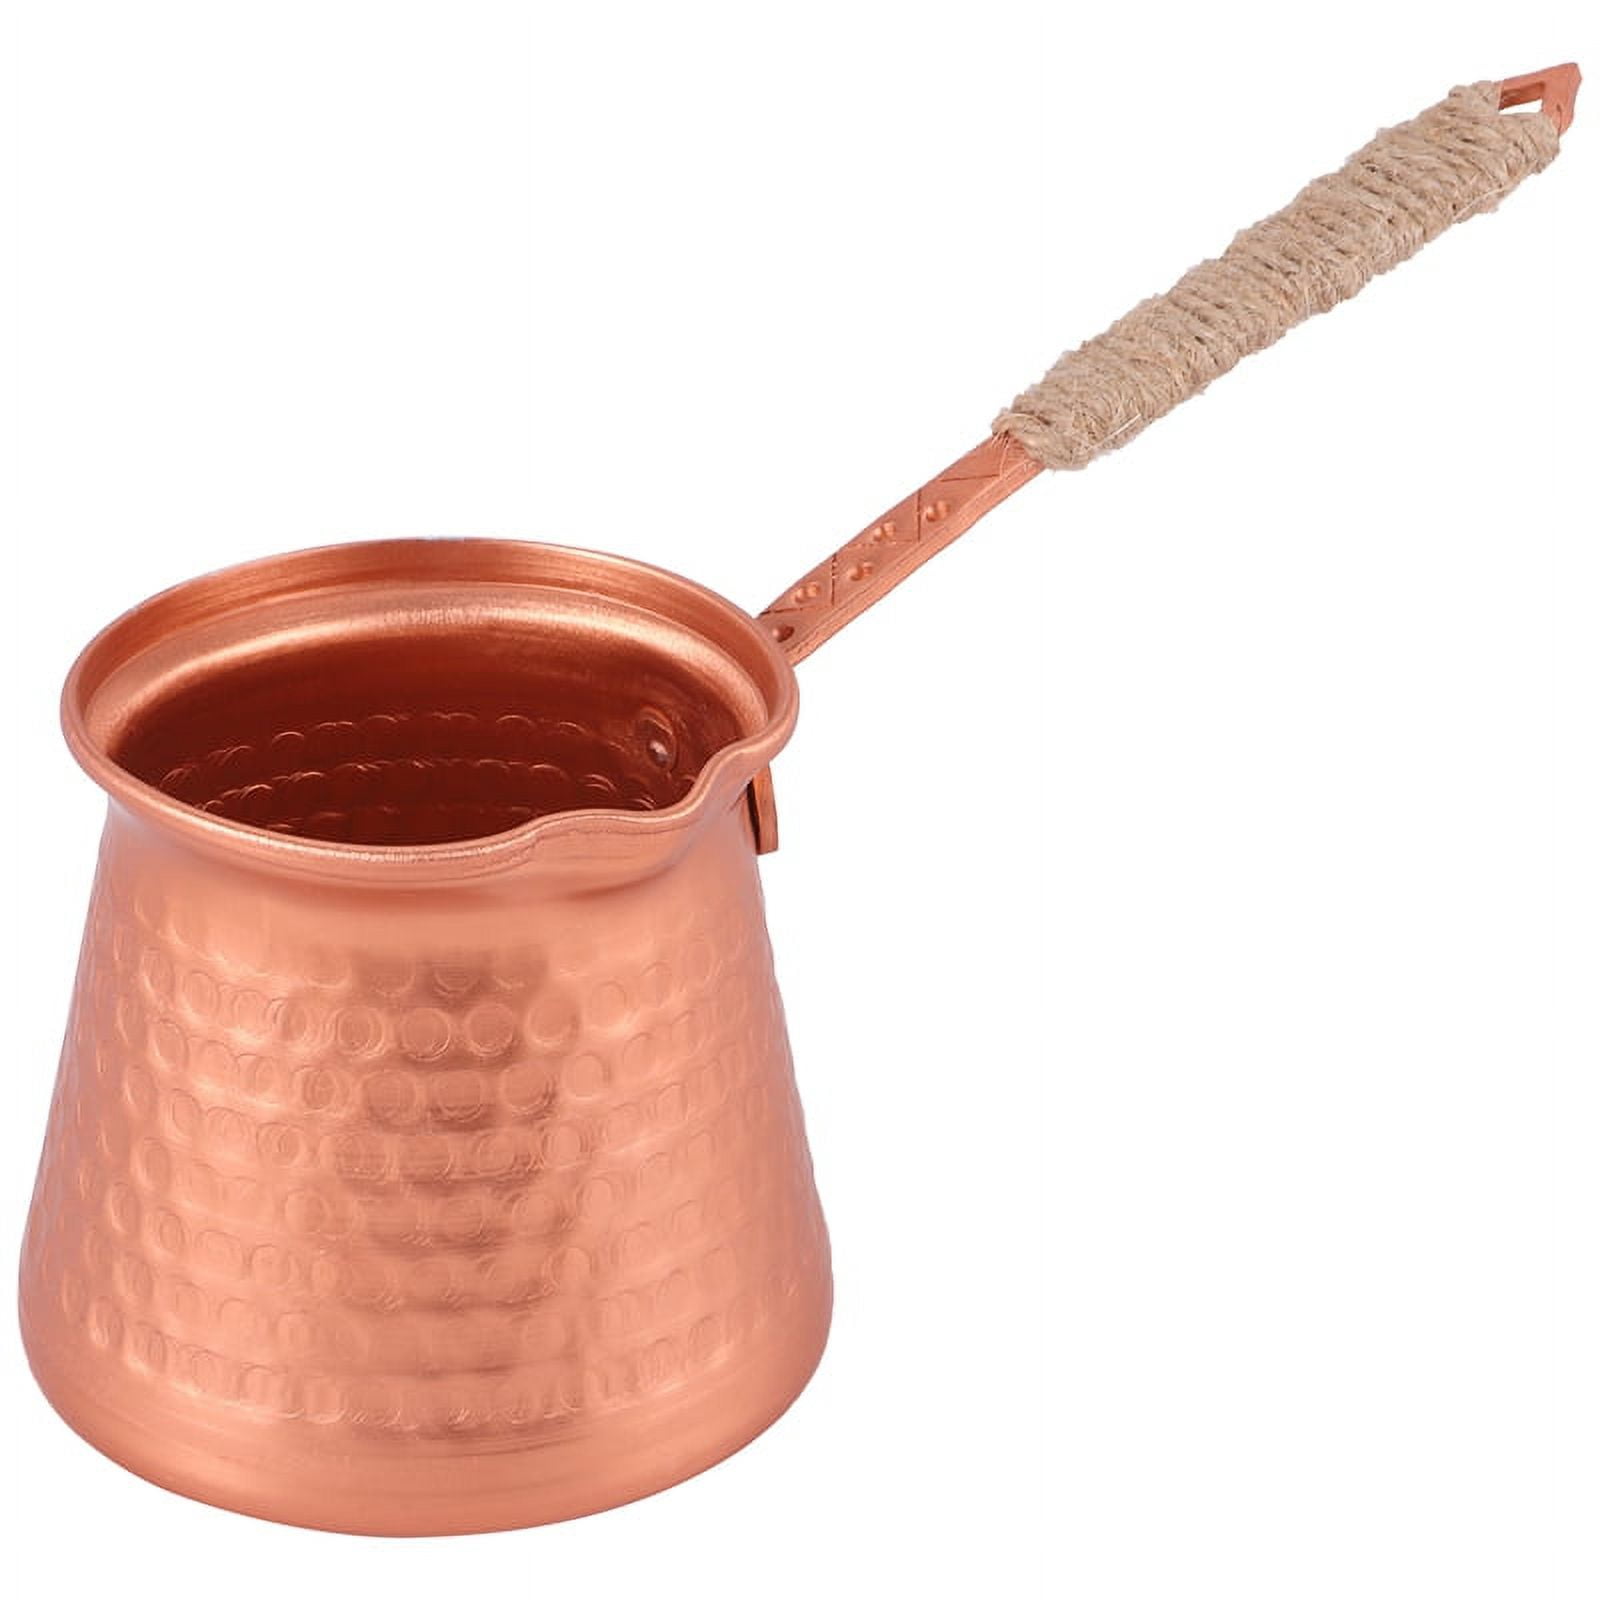 Turkish Coffee Pot Set, 3 Pcs Copper